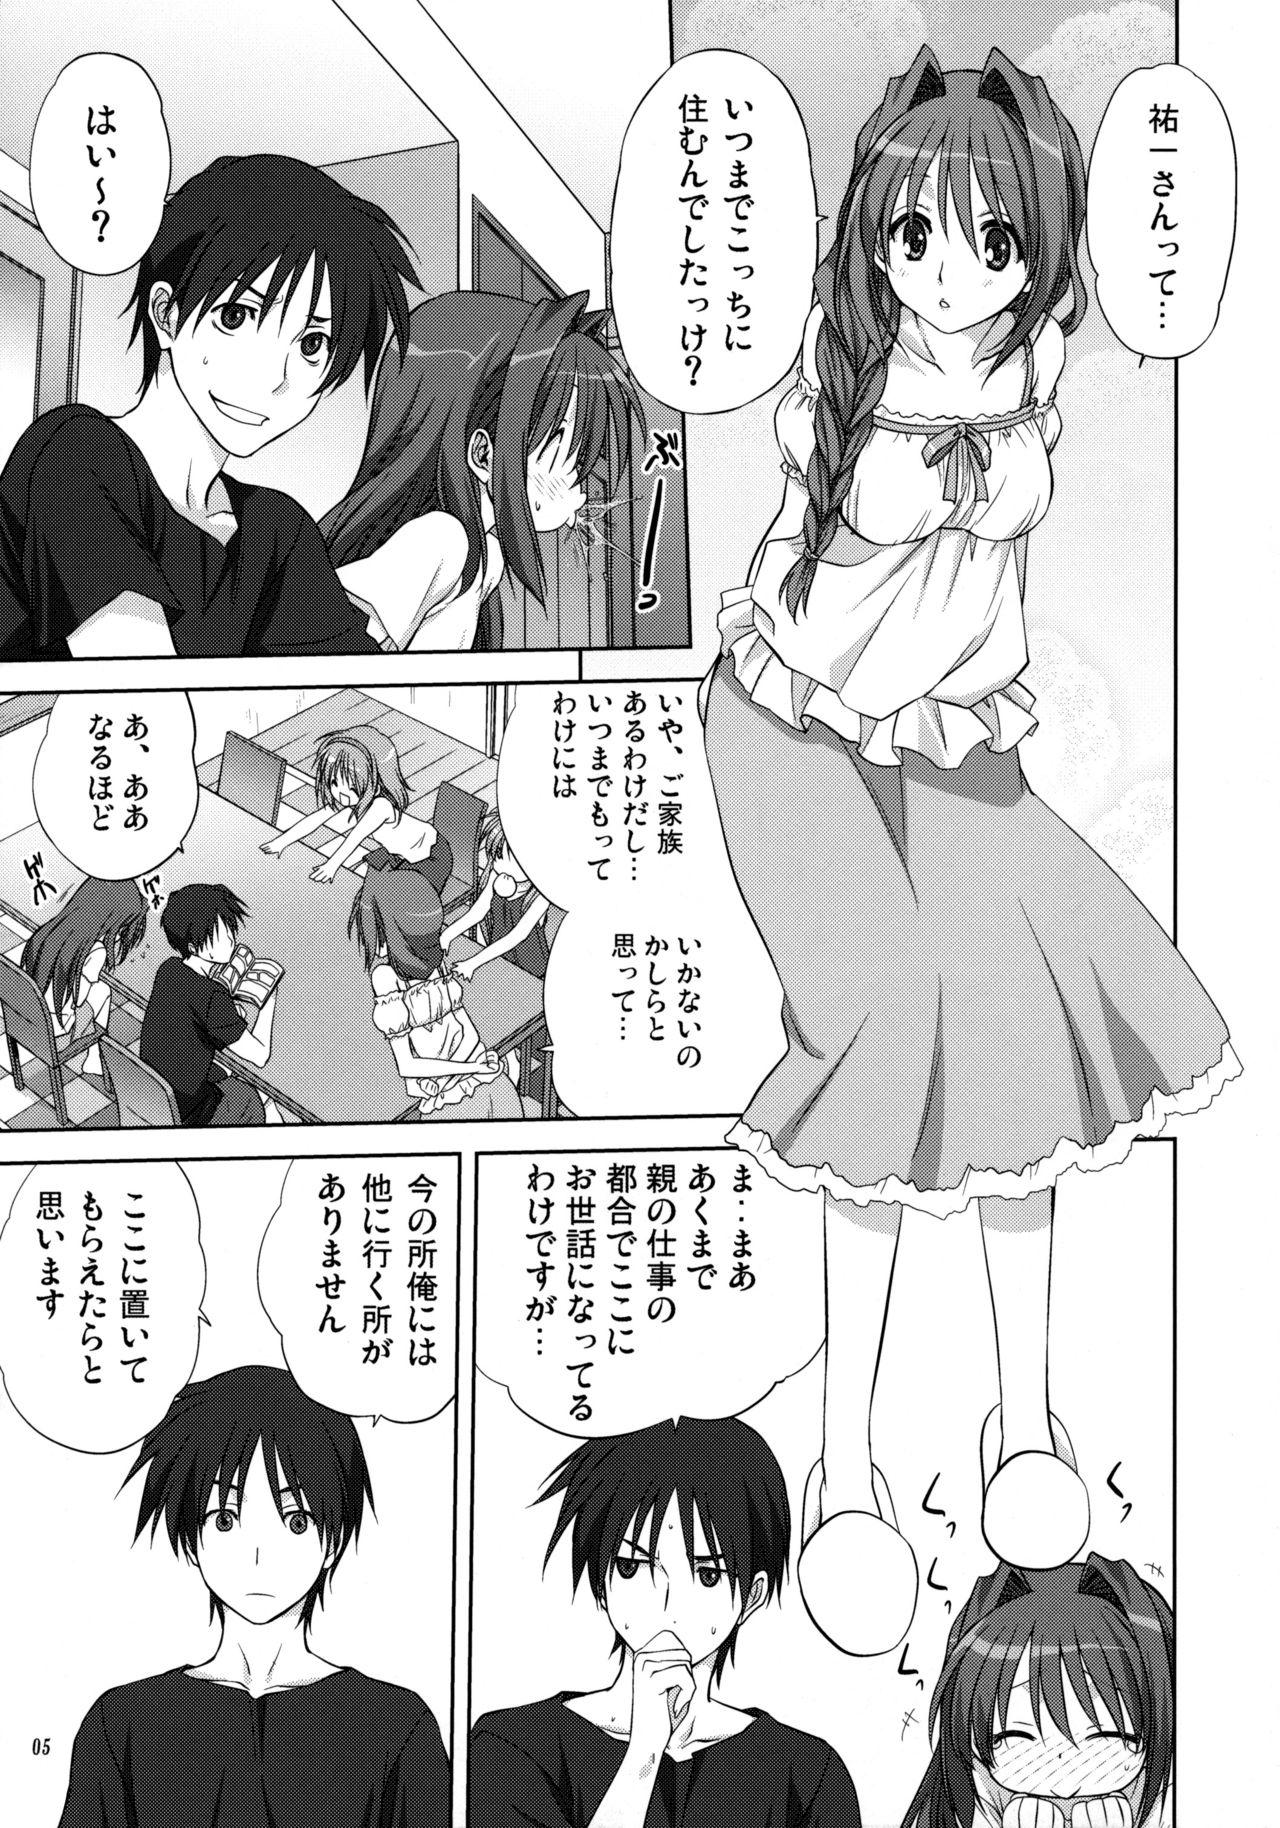 Pauzudo Akiko-san to Issho 8 - Kanon Her - Page 4